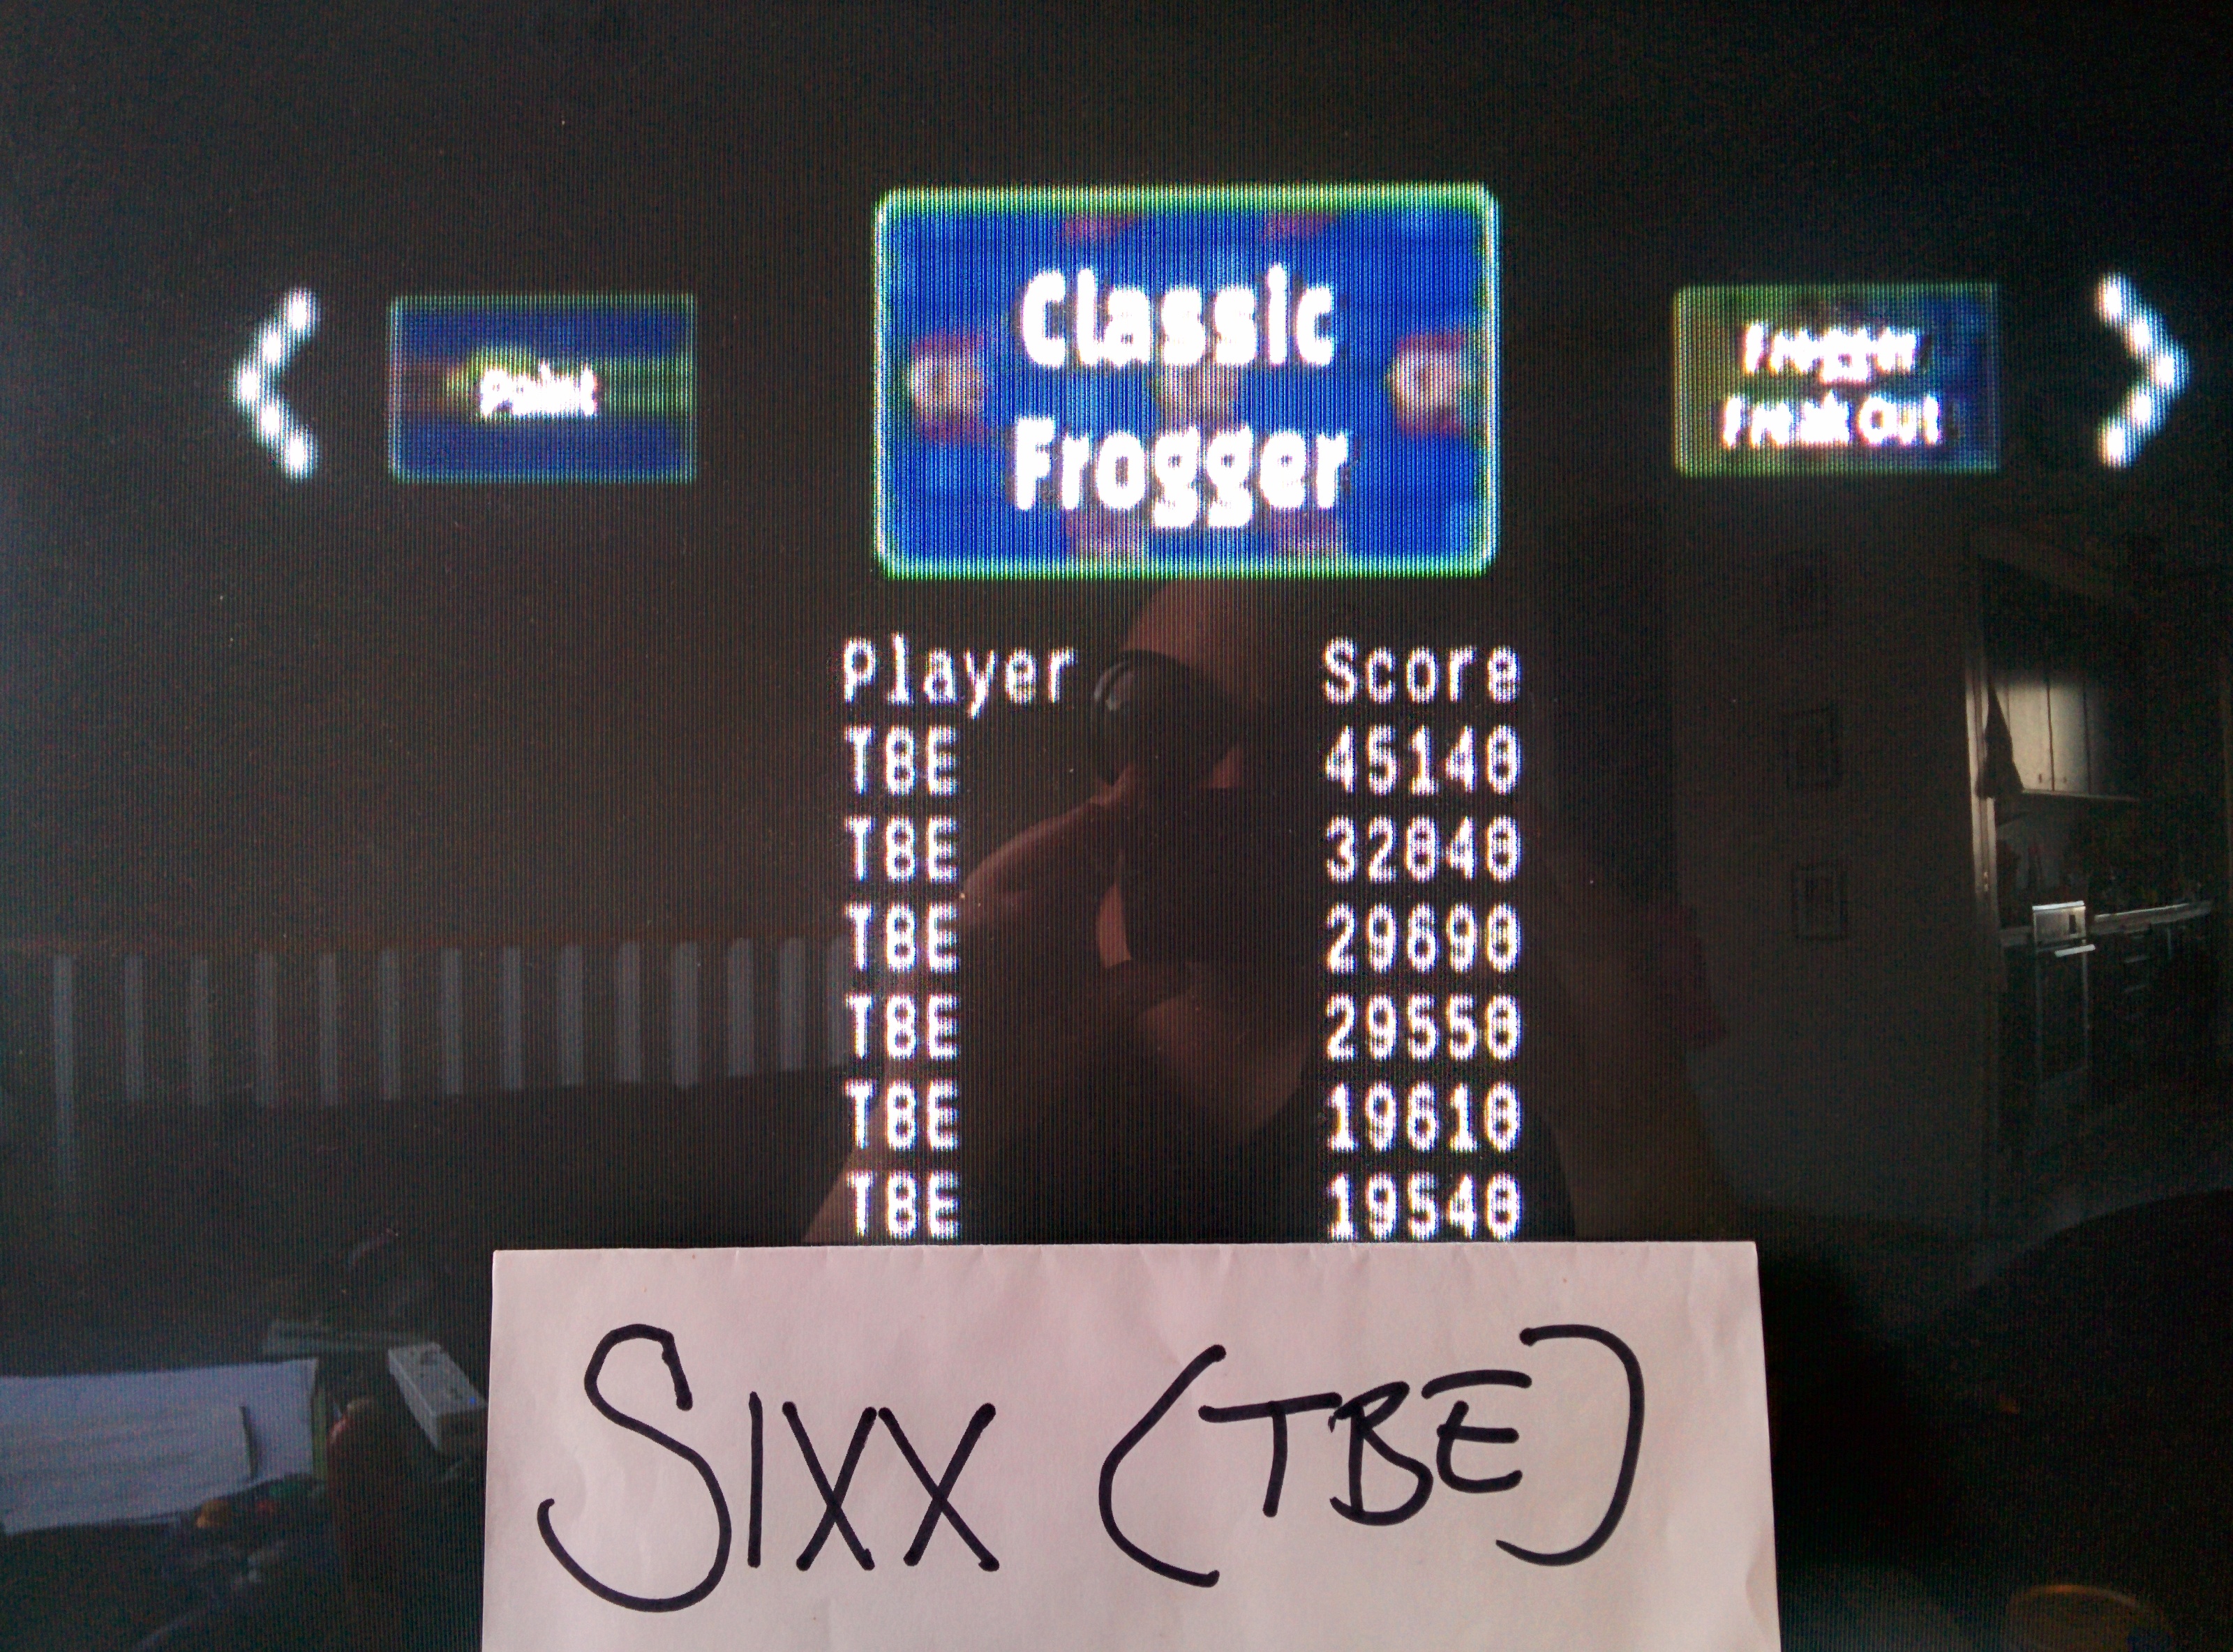 Sixx: Frogger Hyper Arcade Edition: Classic Frogger 8-bit (Wii) 45,140 points on 2014-05-01 13:28:08